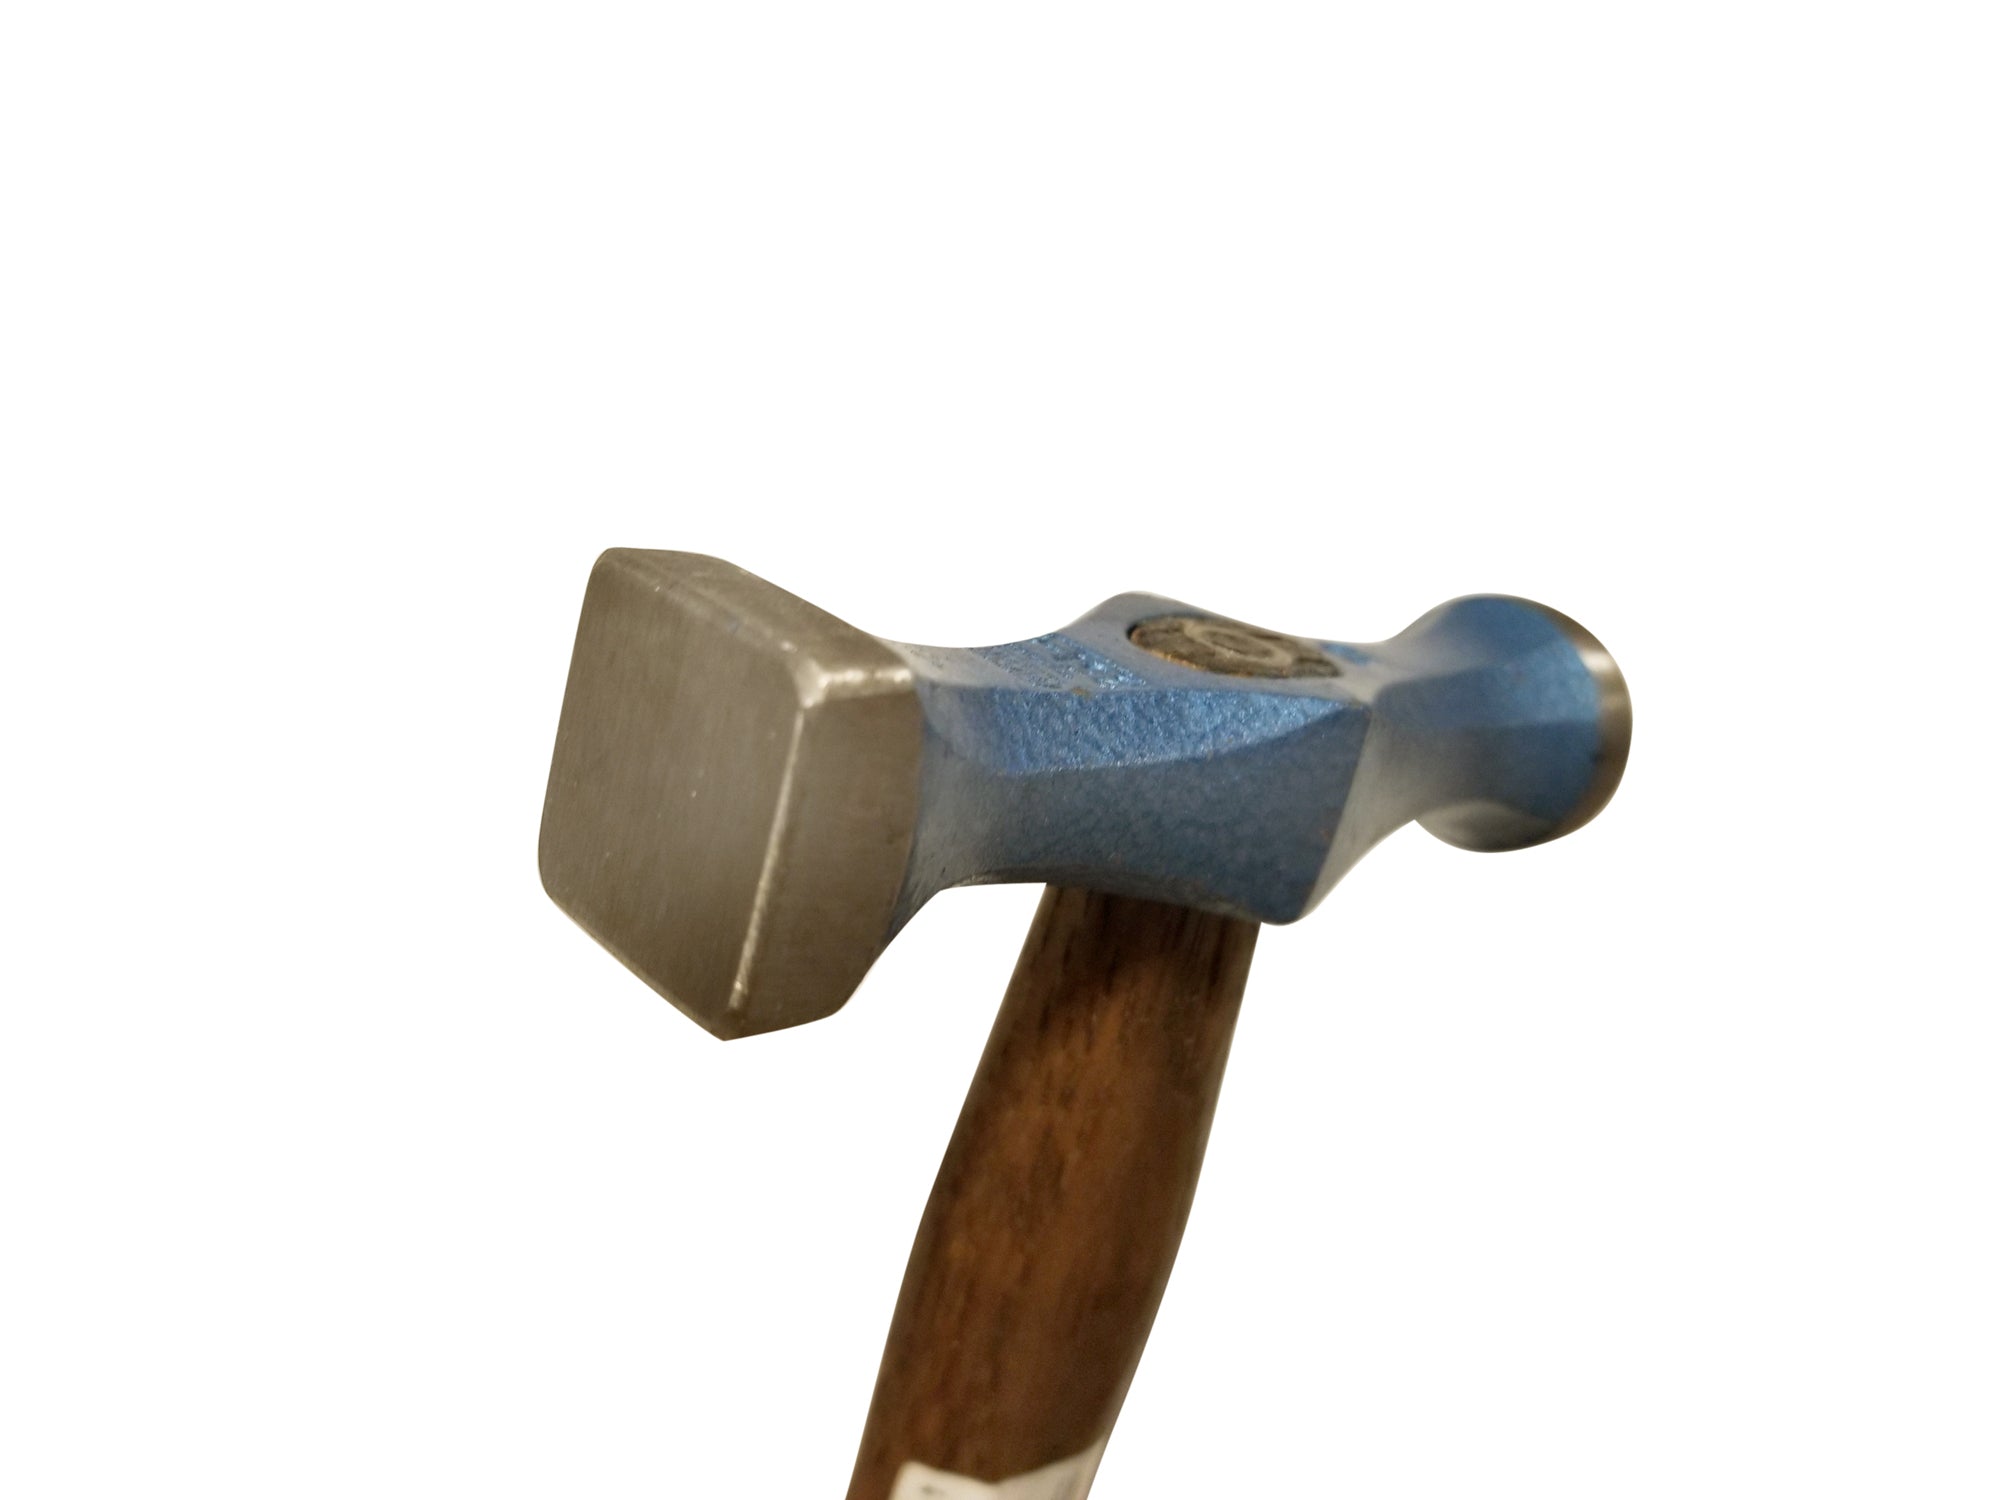 Hand-forged planishing hammer - Double headed round hammer for blacksmithing